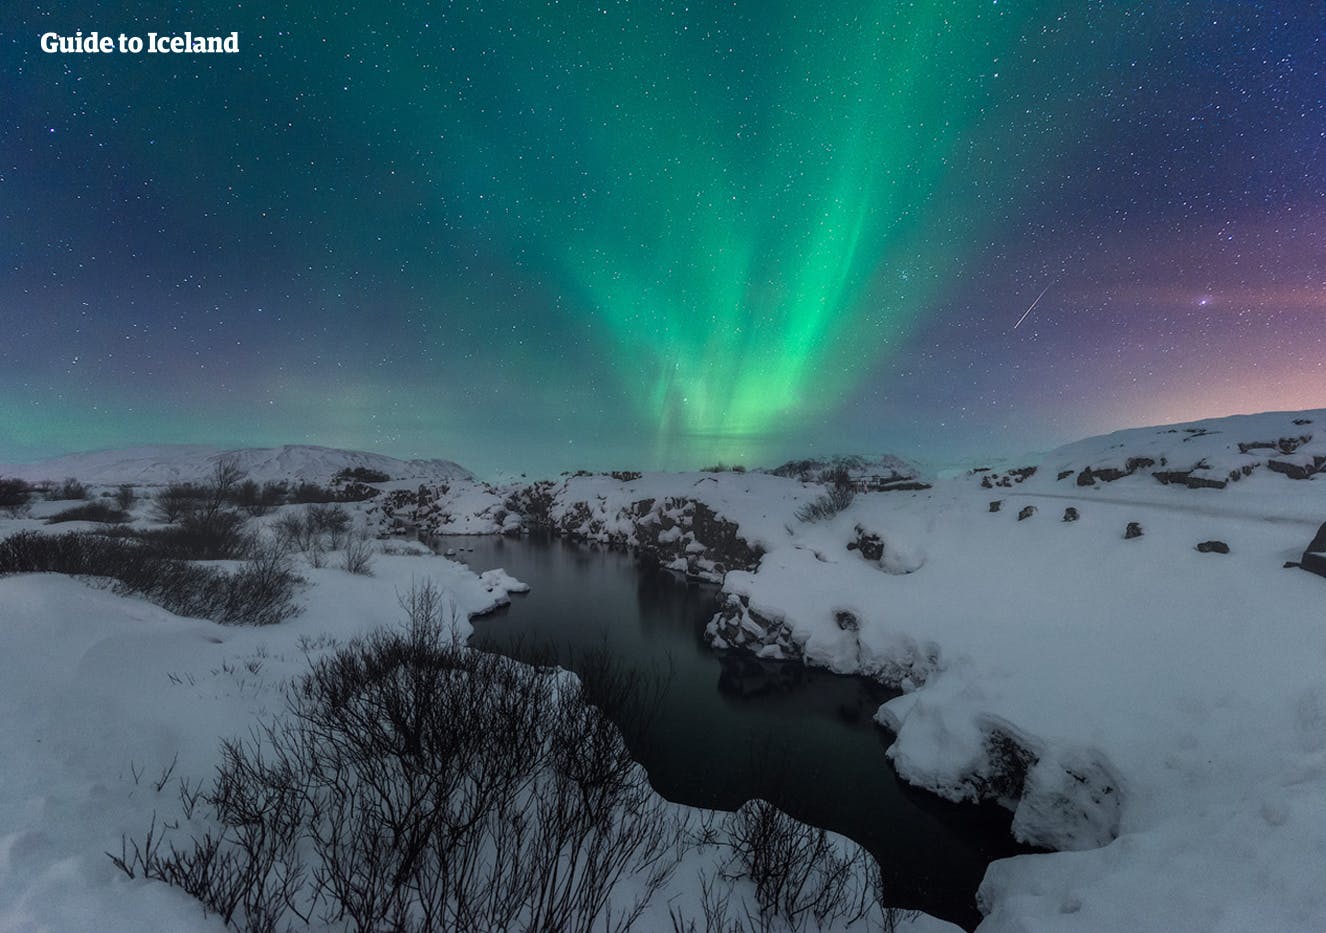 Thingvellir National Park in South West Iceland under a brilliant Aurora-filled sky.